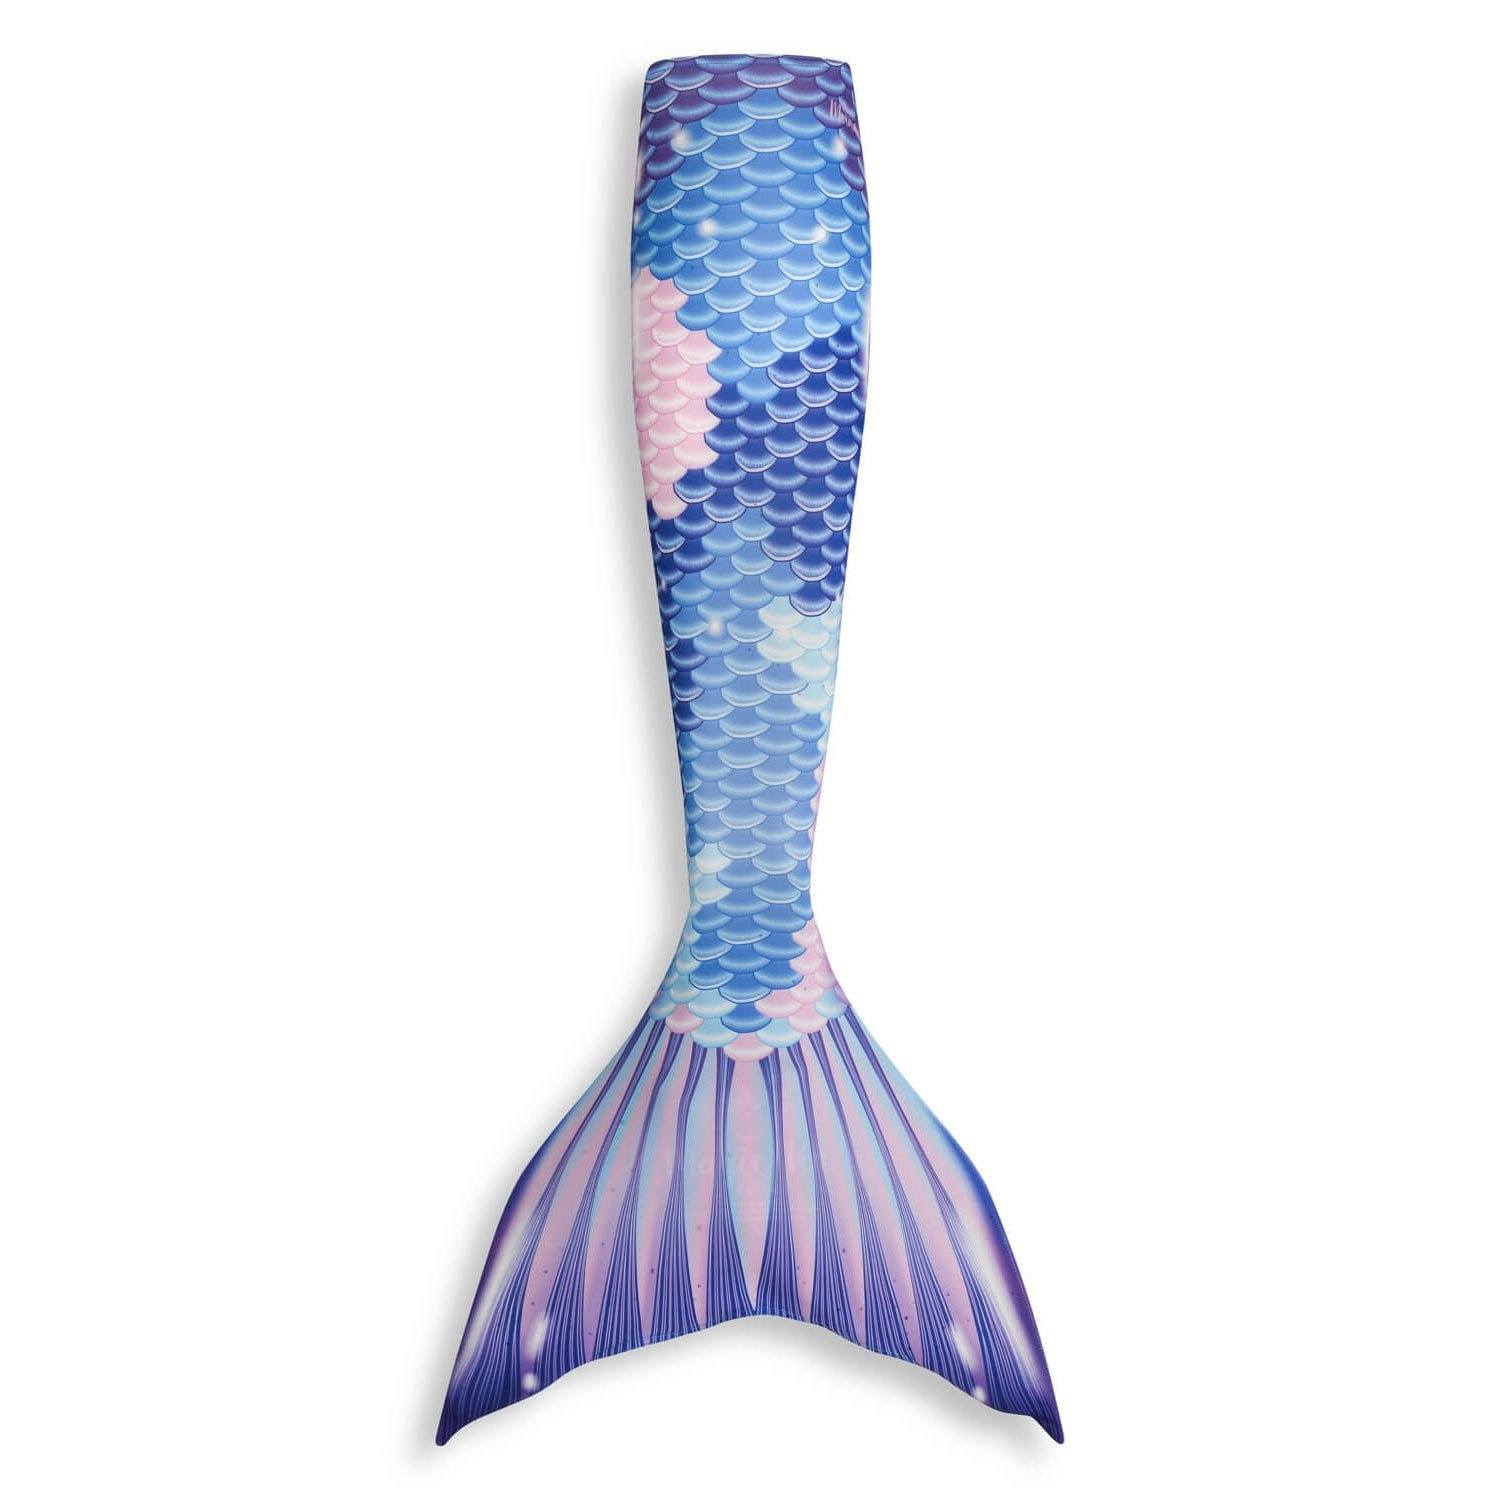 Mayfair Poppy Mermaid Tail